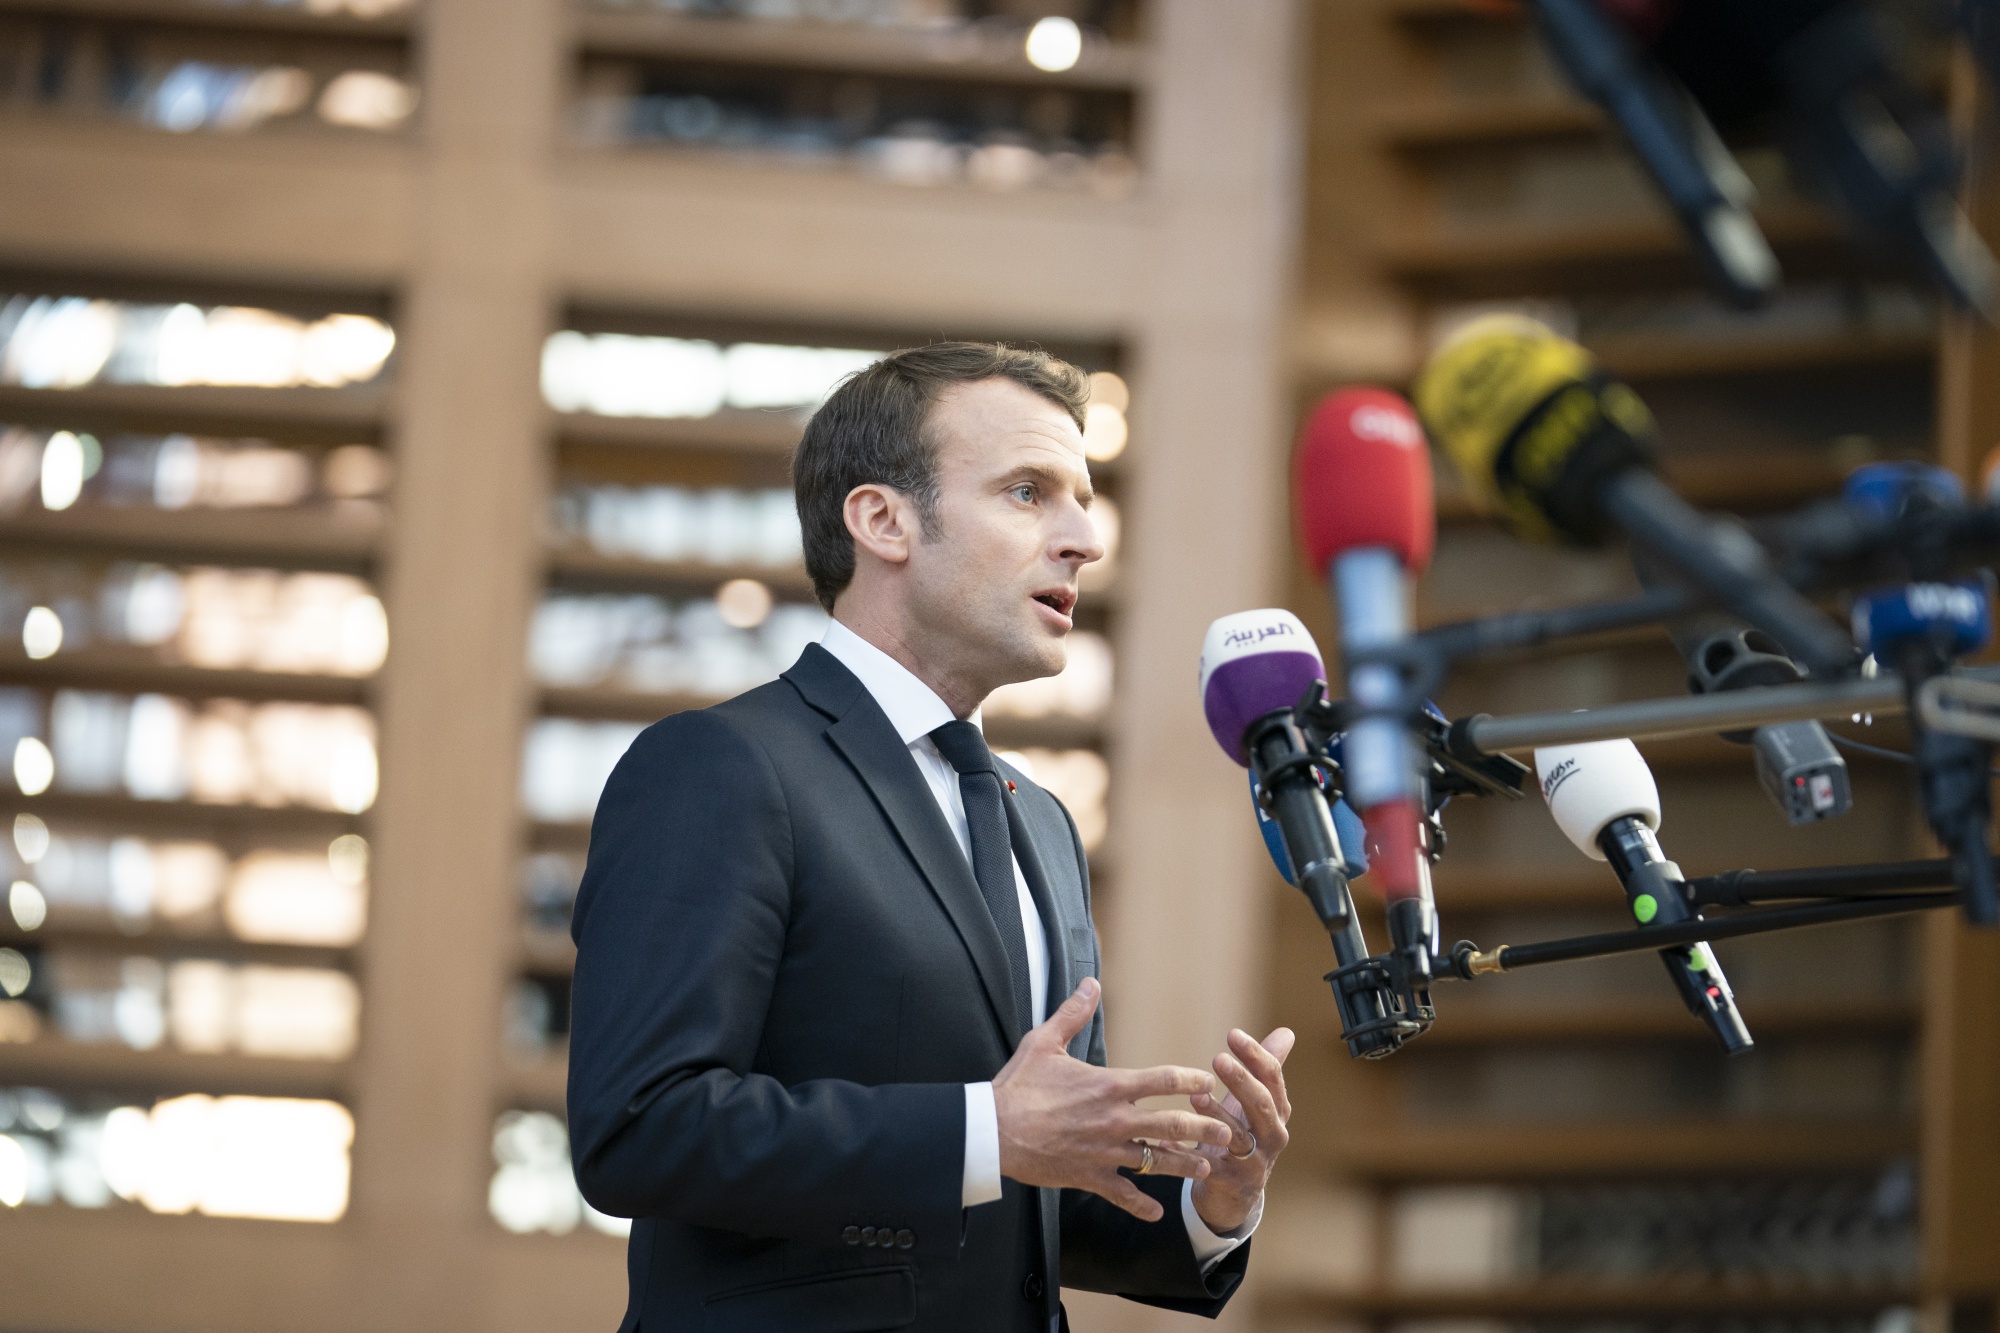 Emmanuel Macron speaks to journalist as he arrives for a European Union leaders summit in the Europa building in Brussels on April 10, 2019.